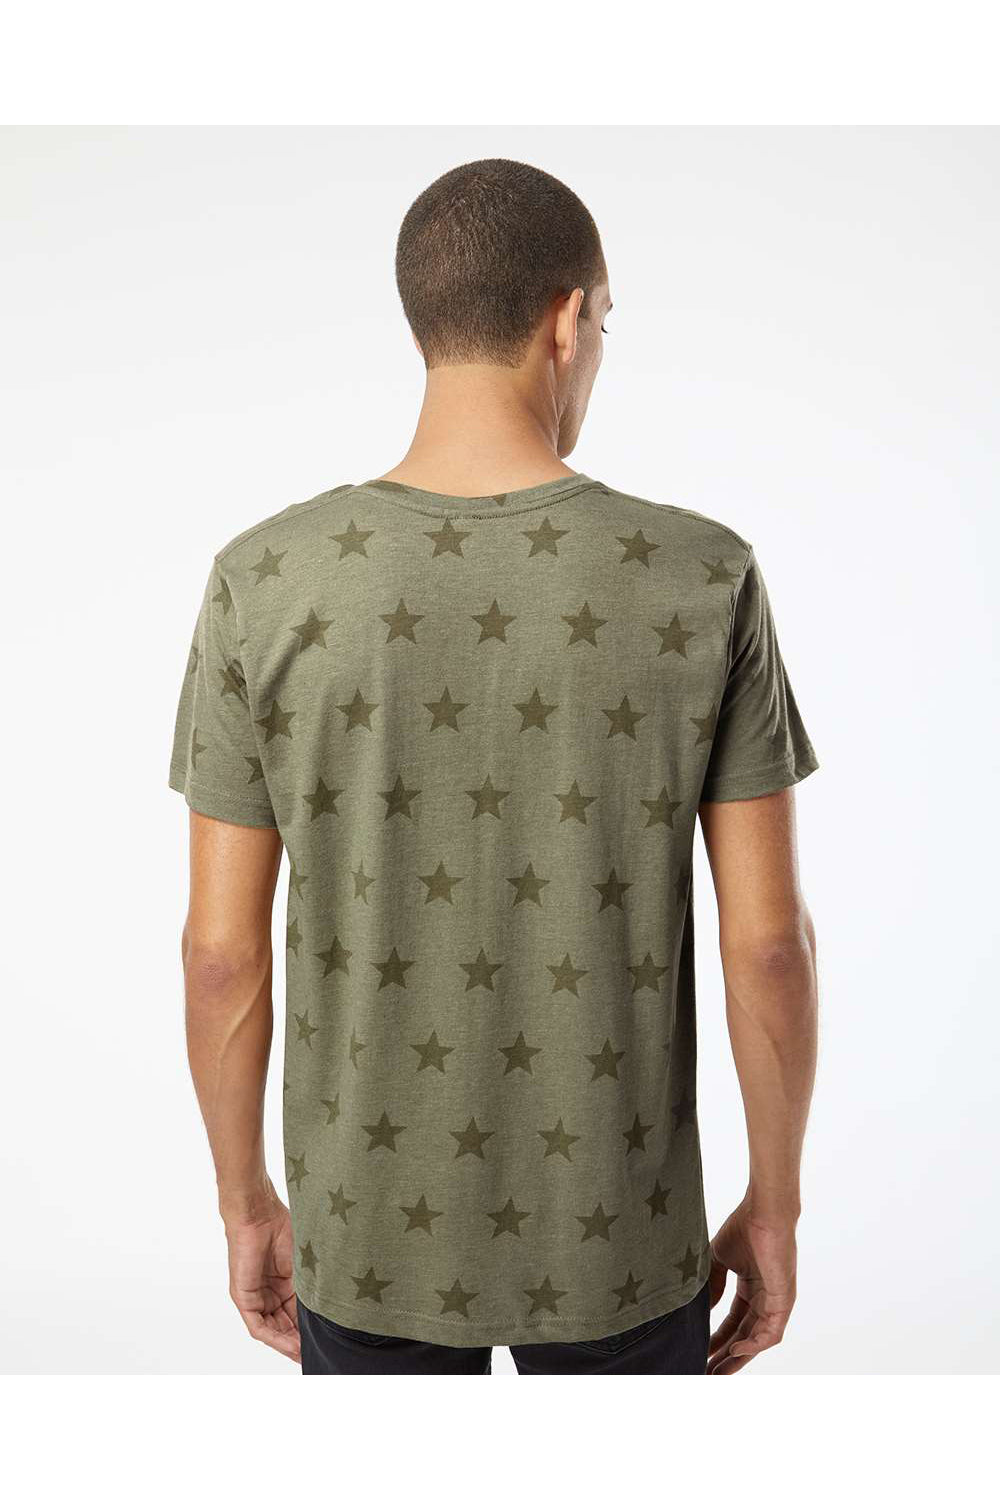 Code Five 3929 Mens Star Print Short Sleeve Crewneck T-Shirt Military Green Model Back